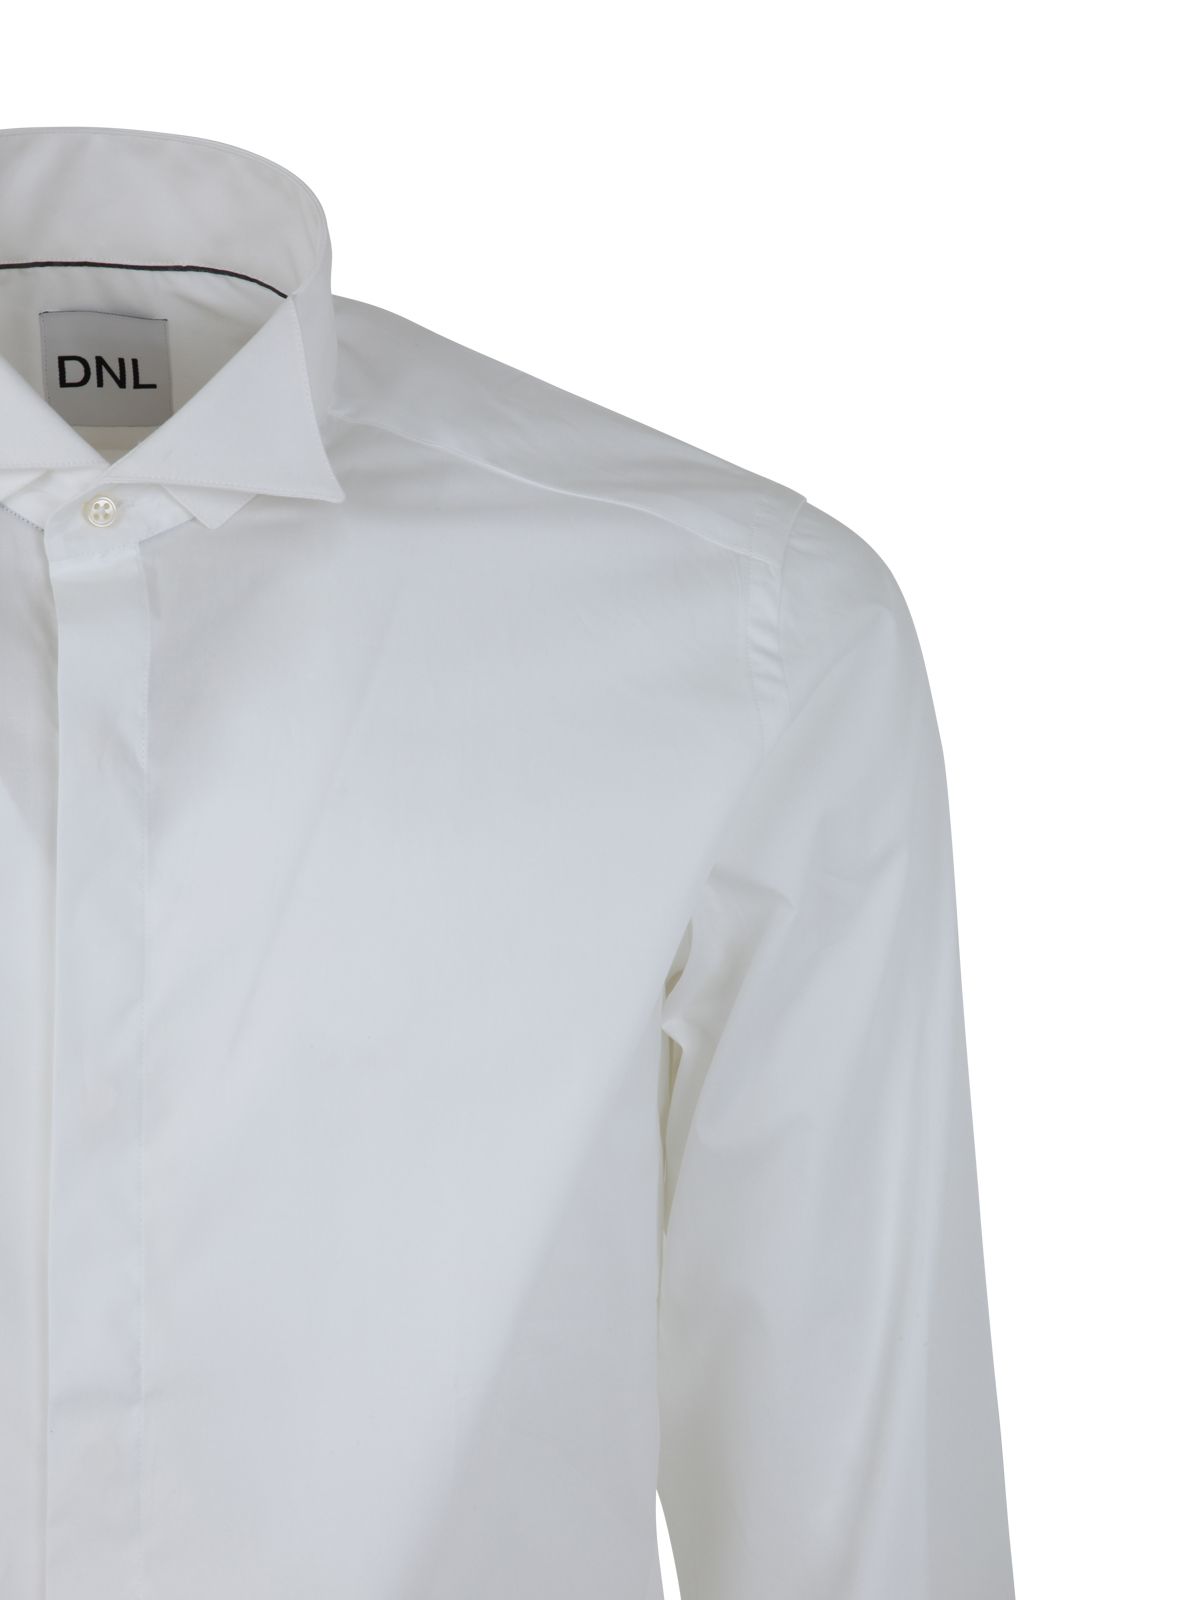 Shop Dnl Men's Classic Slim Shirts